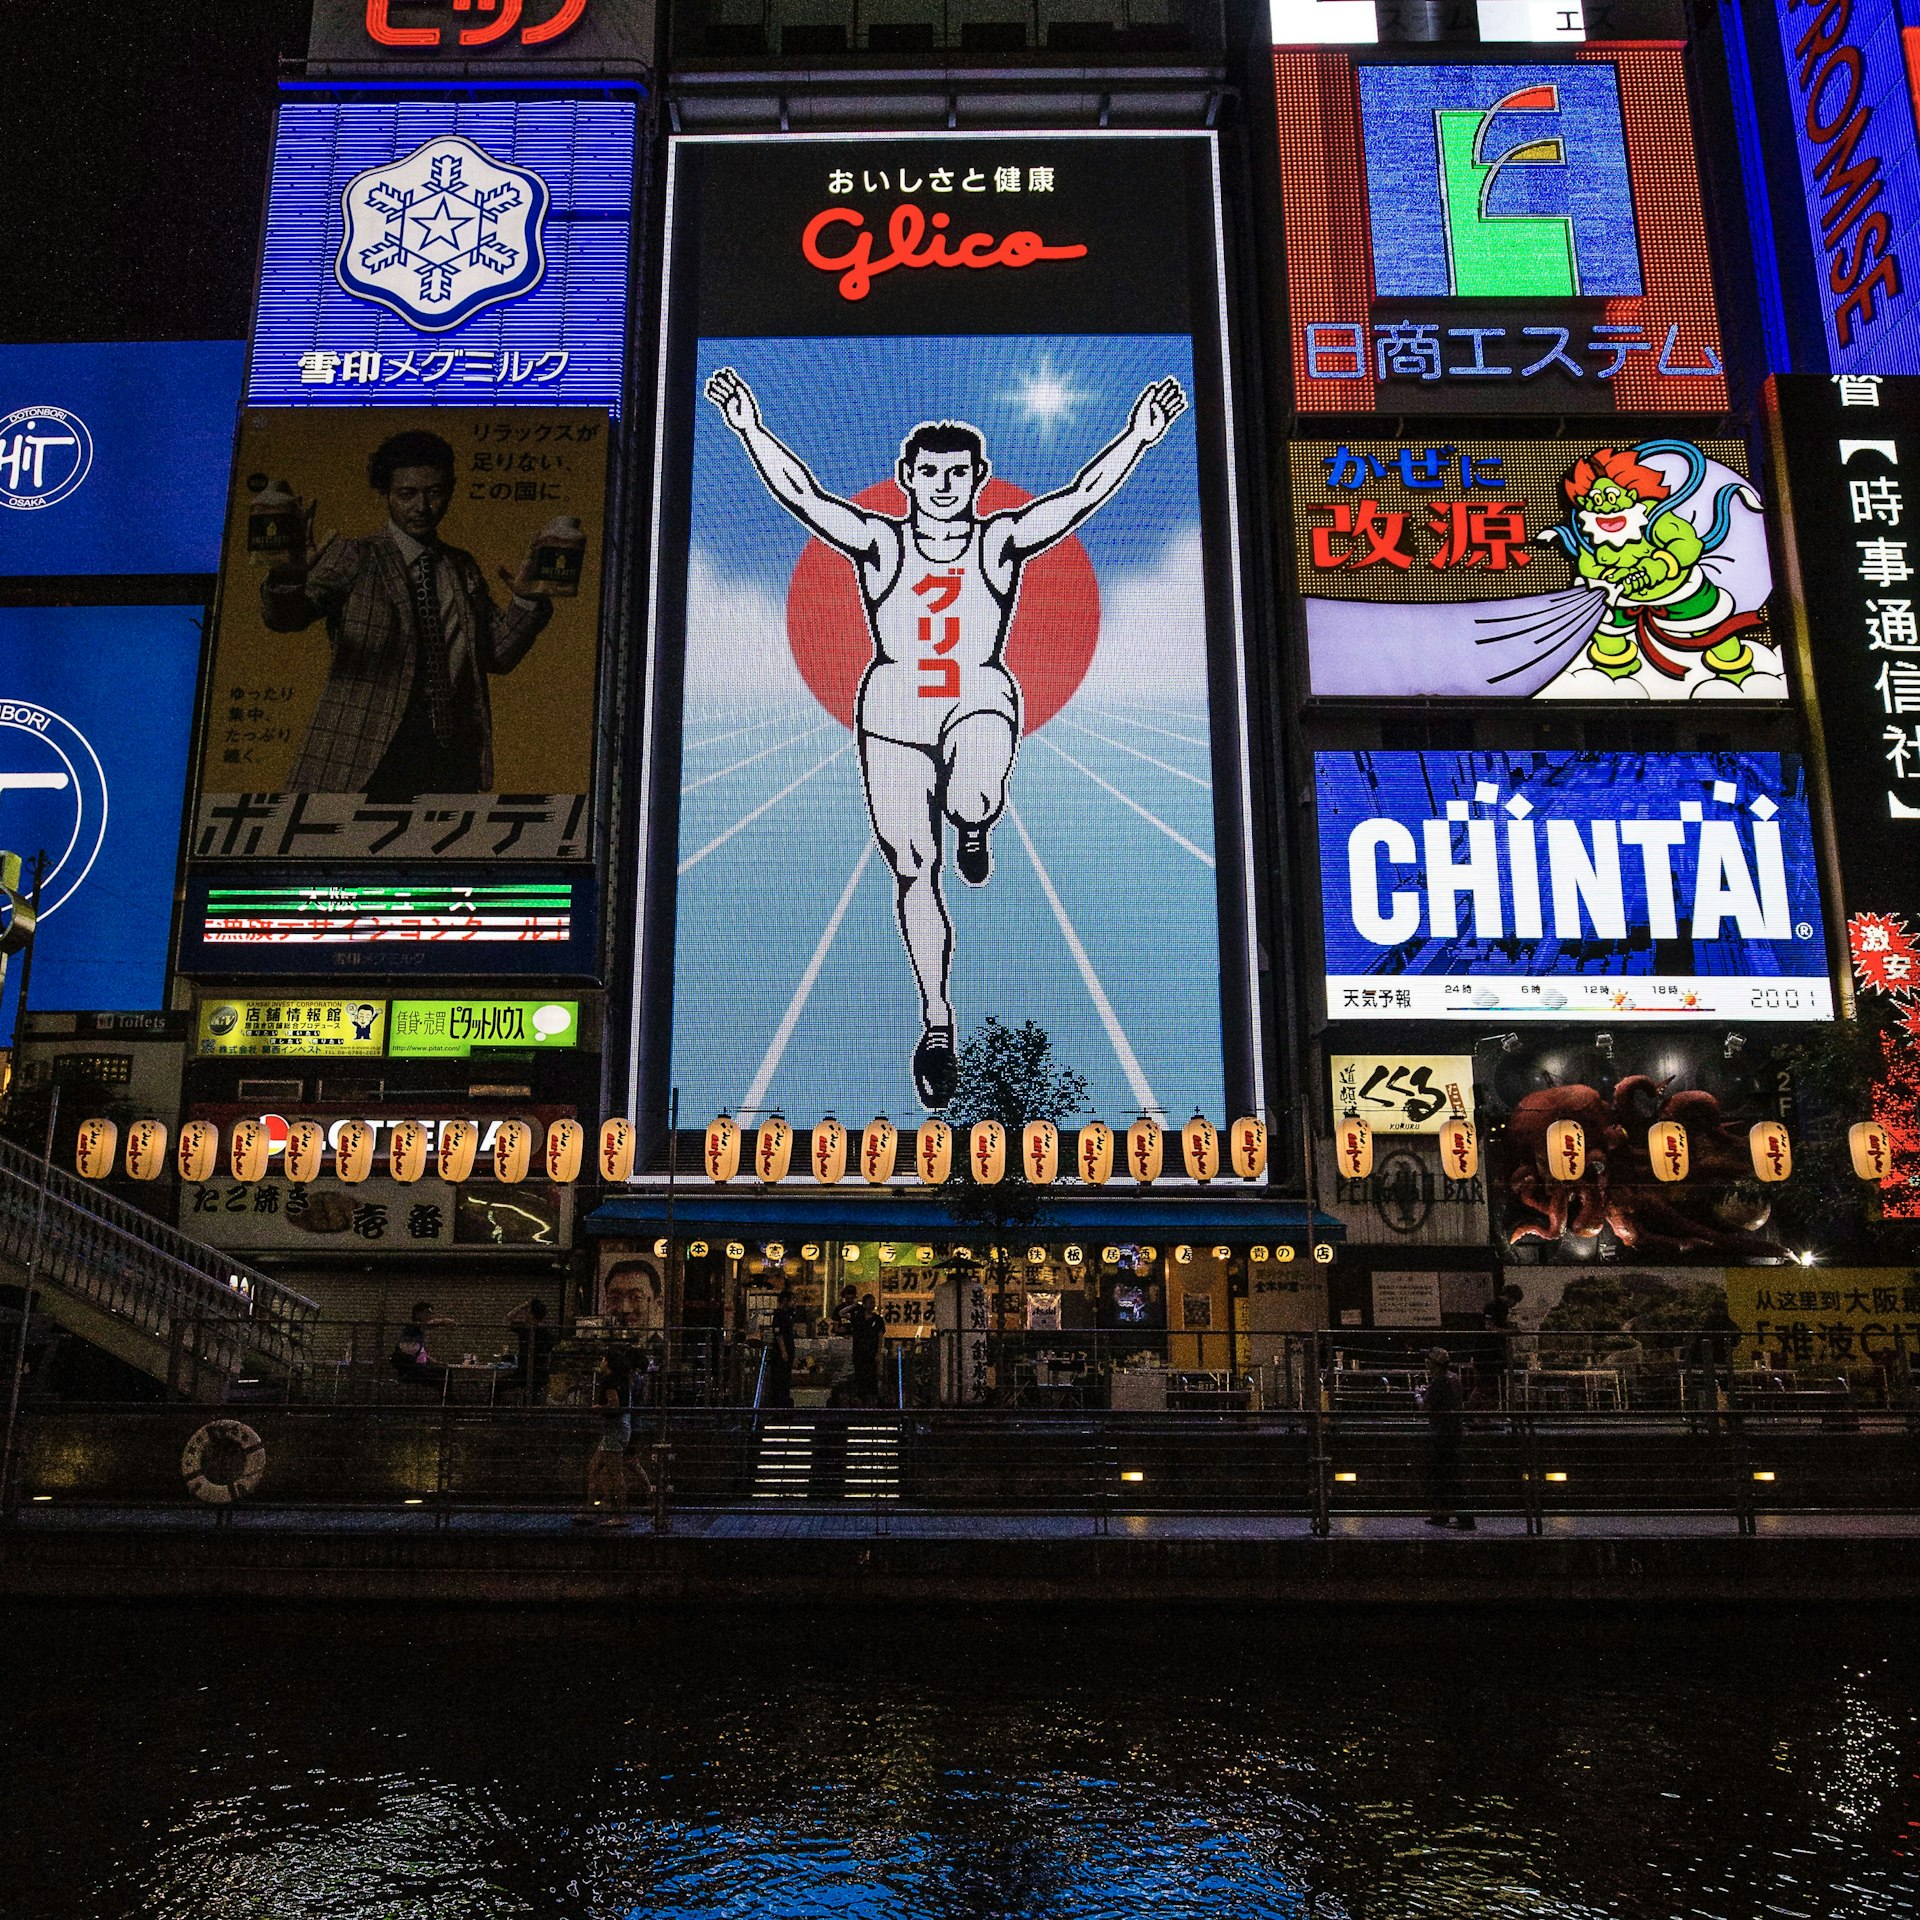 The Glico Man illuminated billboard in Dōtonbori district, Osaka, Japan